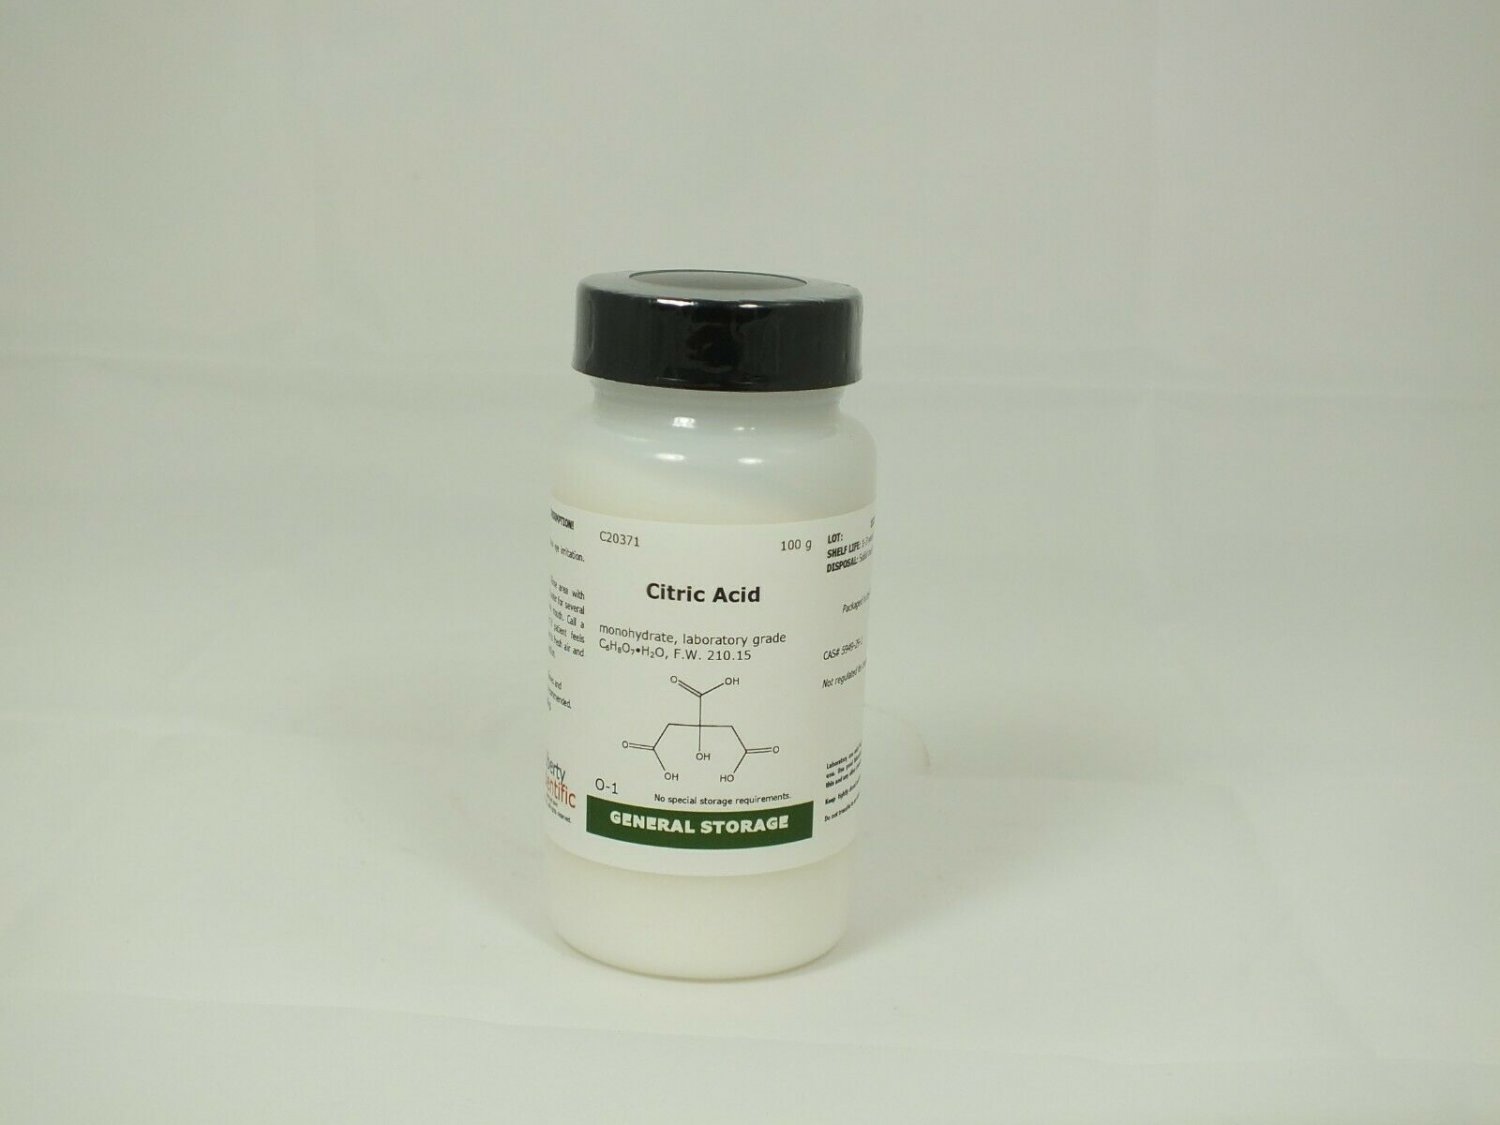 Citric Acid, monohydrate, laboratory grade, 100 g